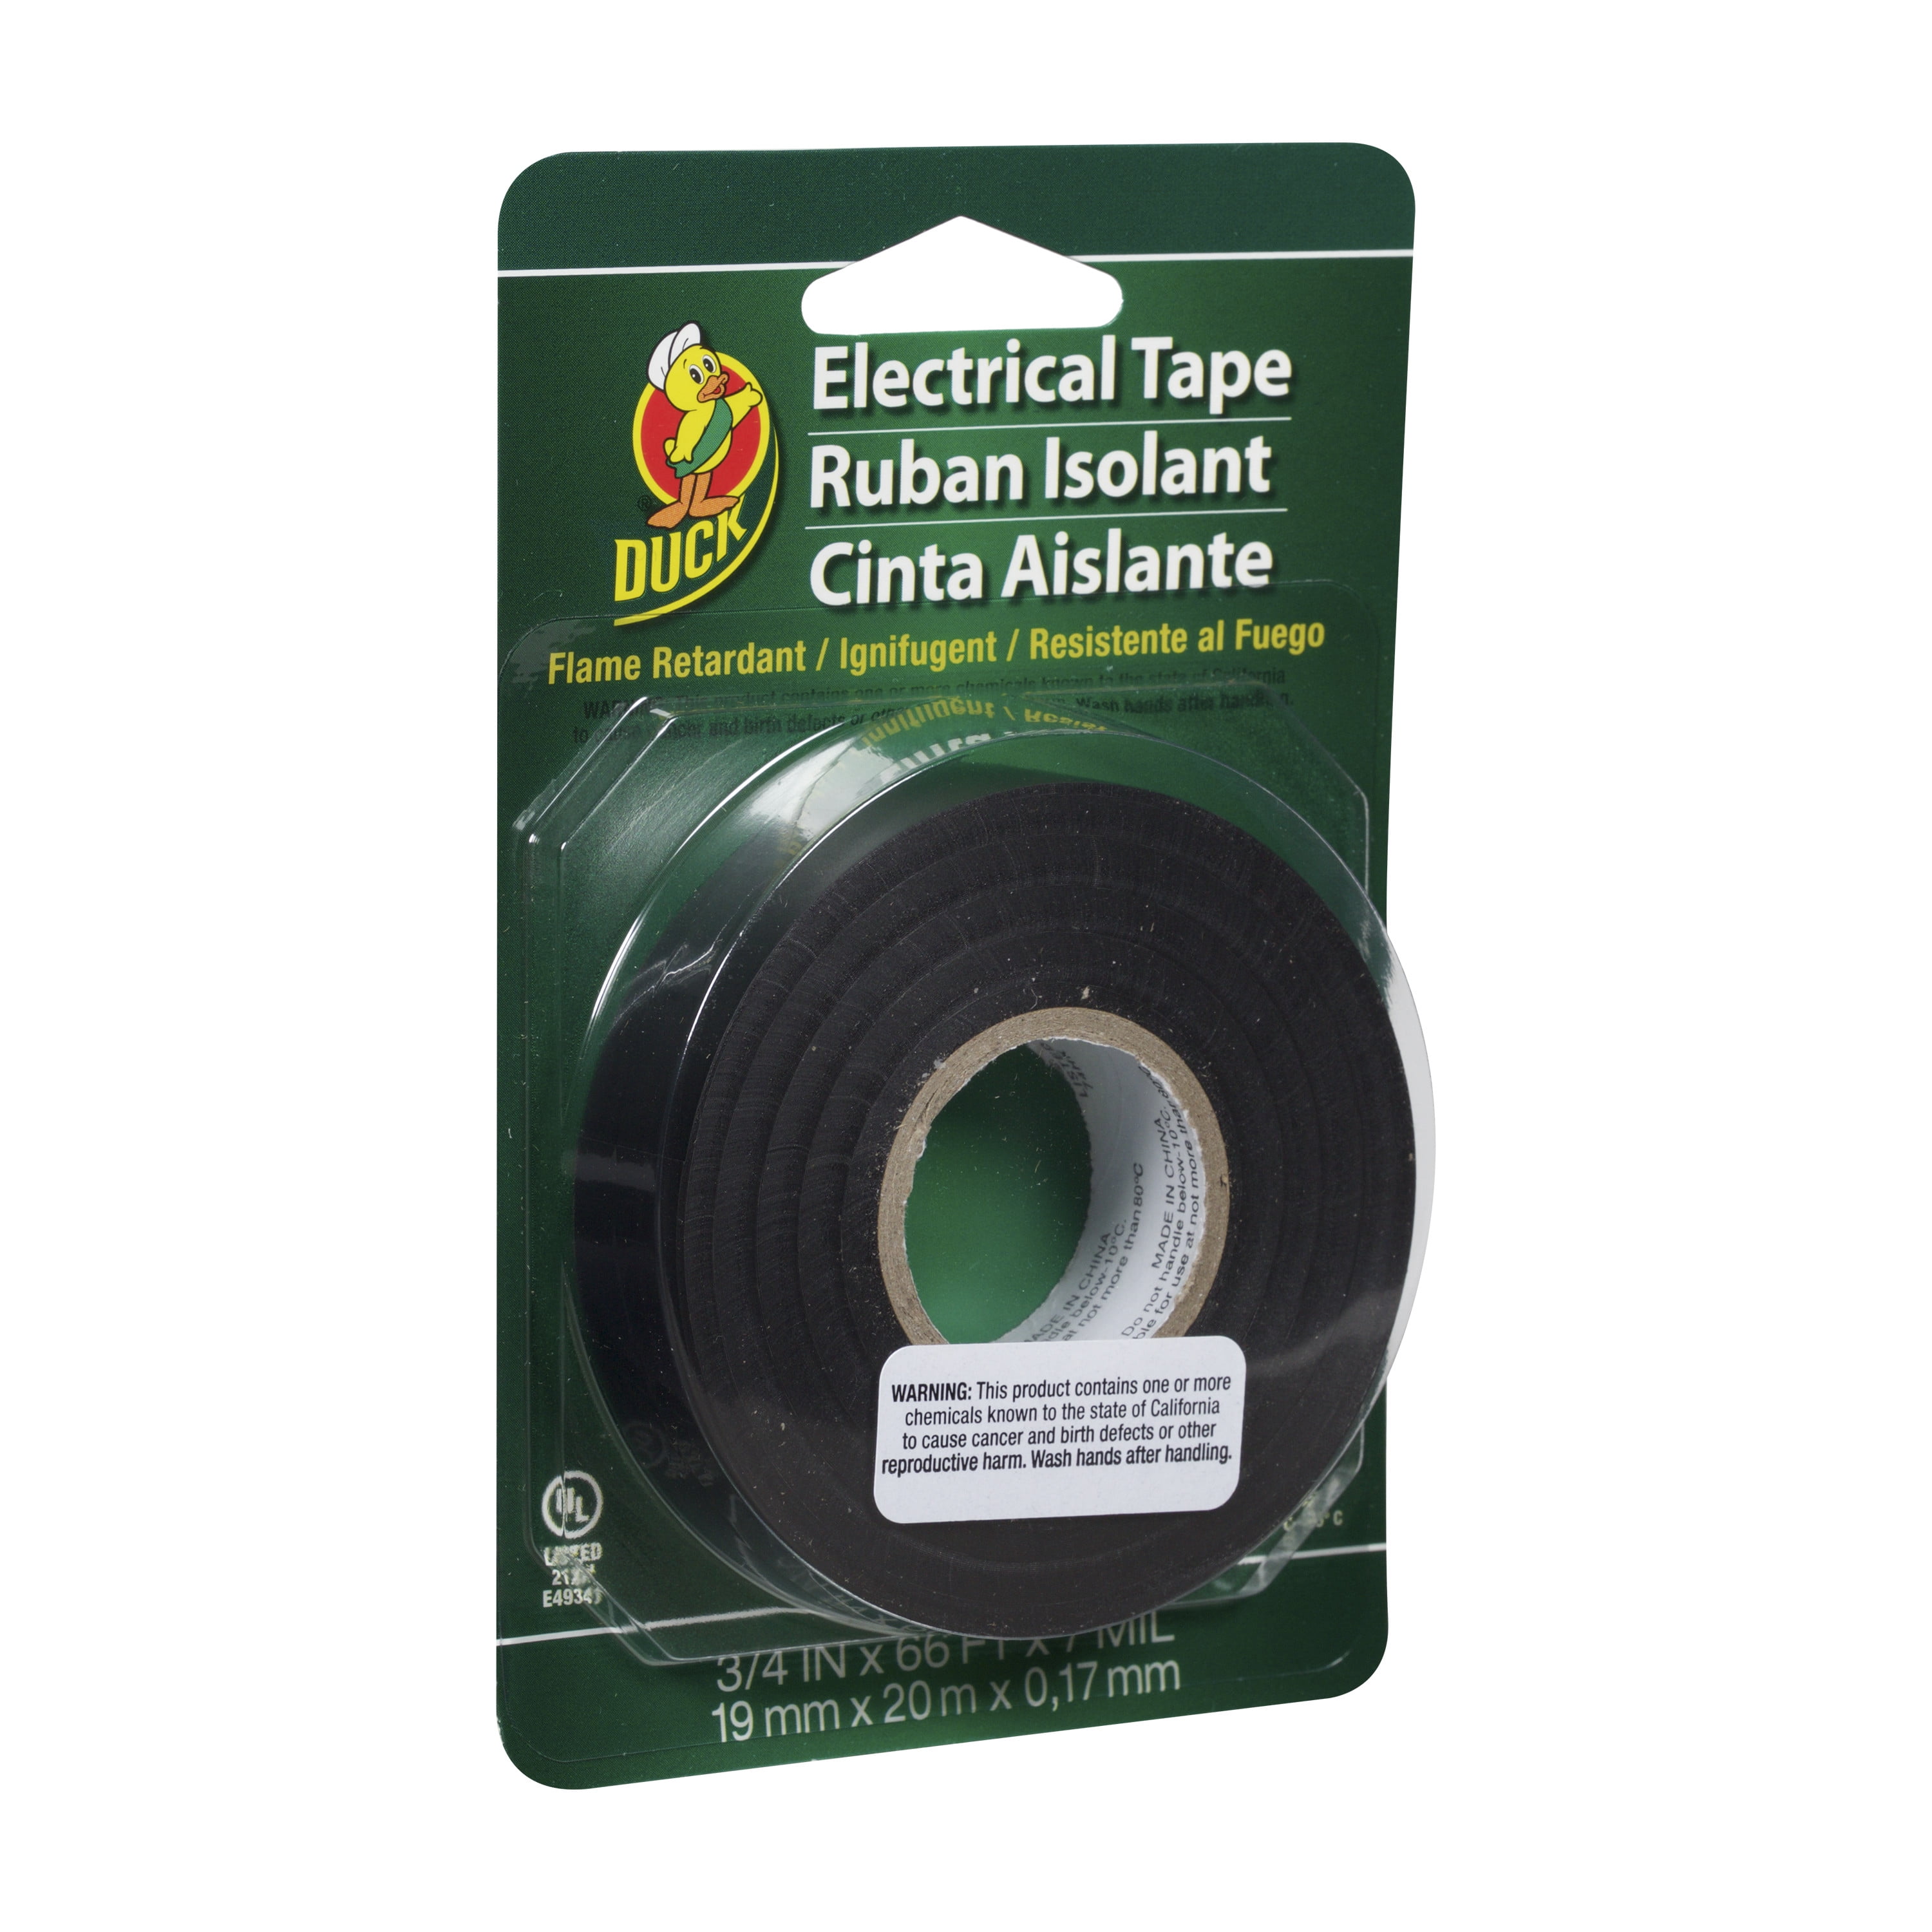 Cloth Tape Automotive Wire Loom Tape Multipurpose Matte Black for Carpet for Pipe Repair 